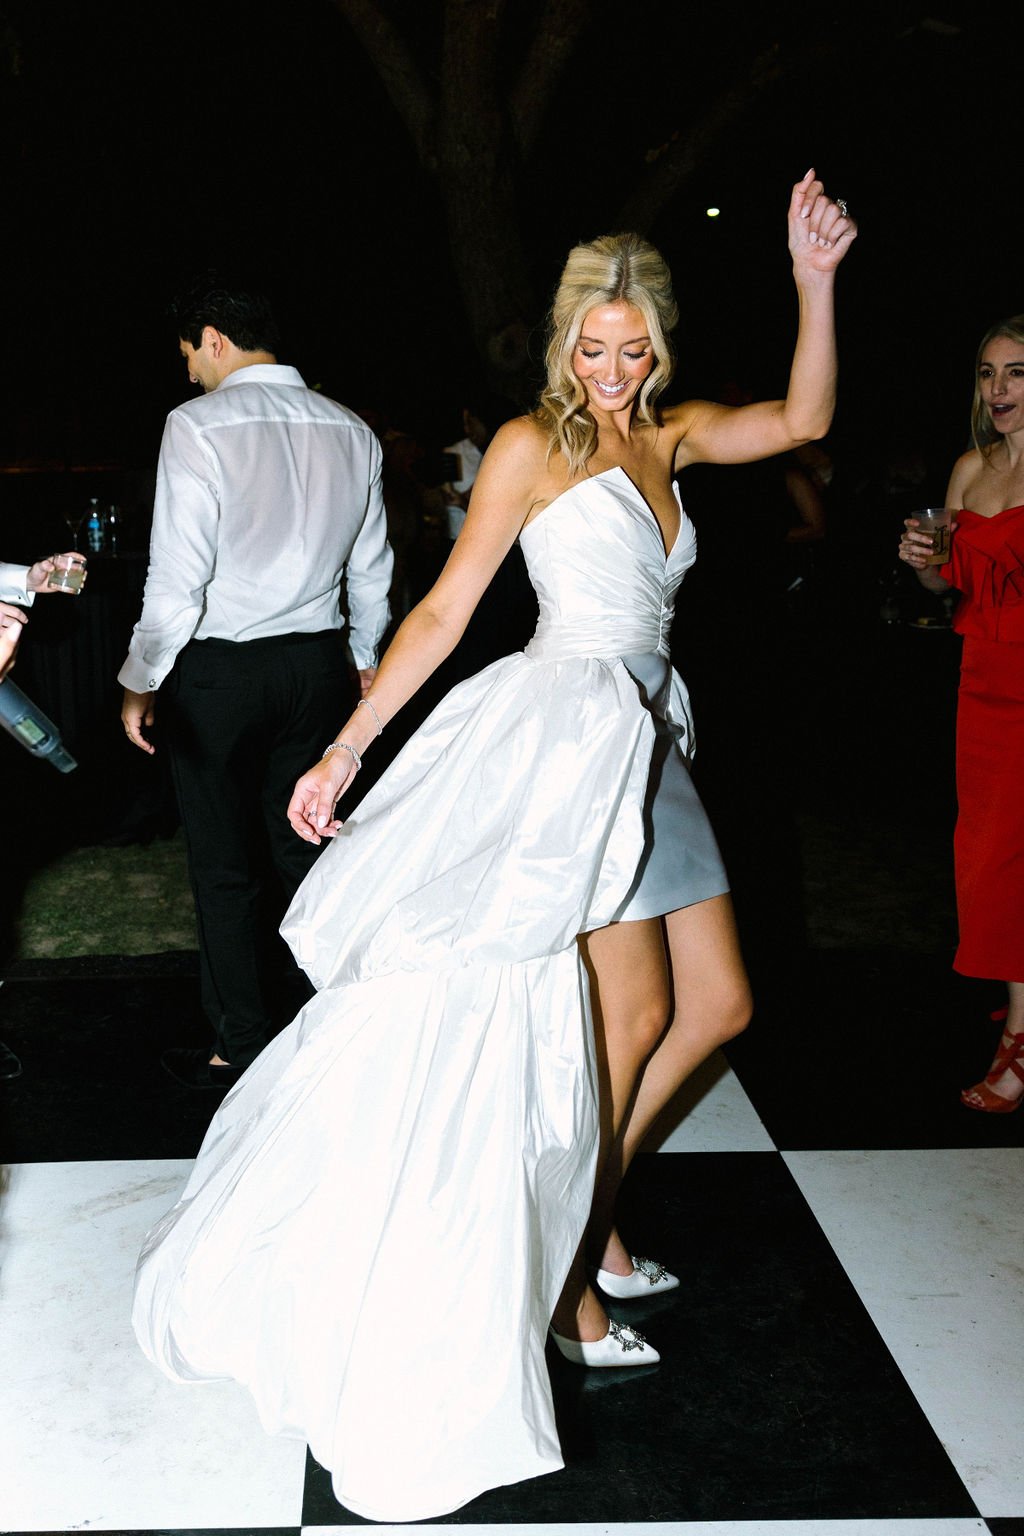 dance party wedding reception